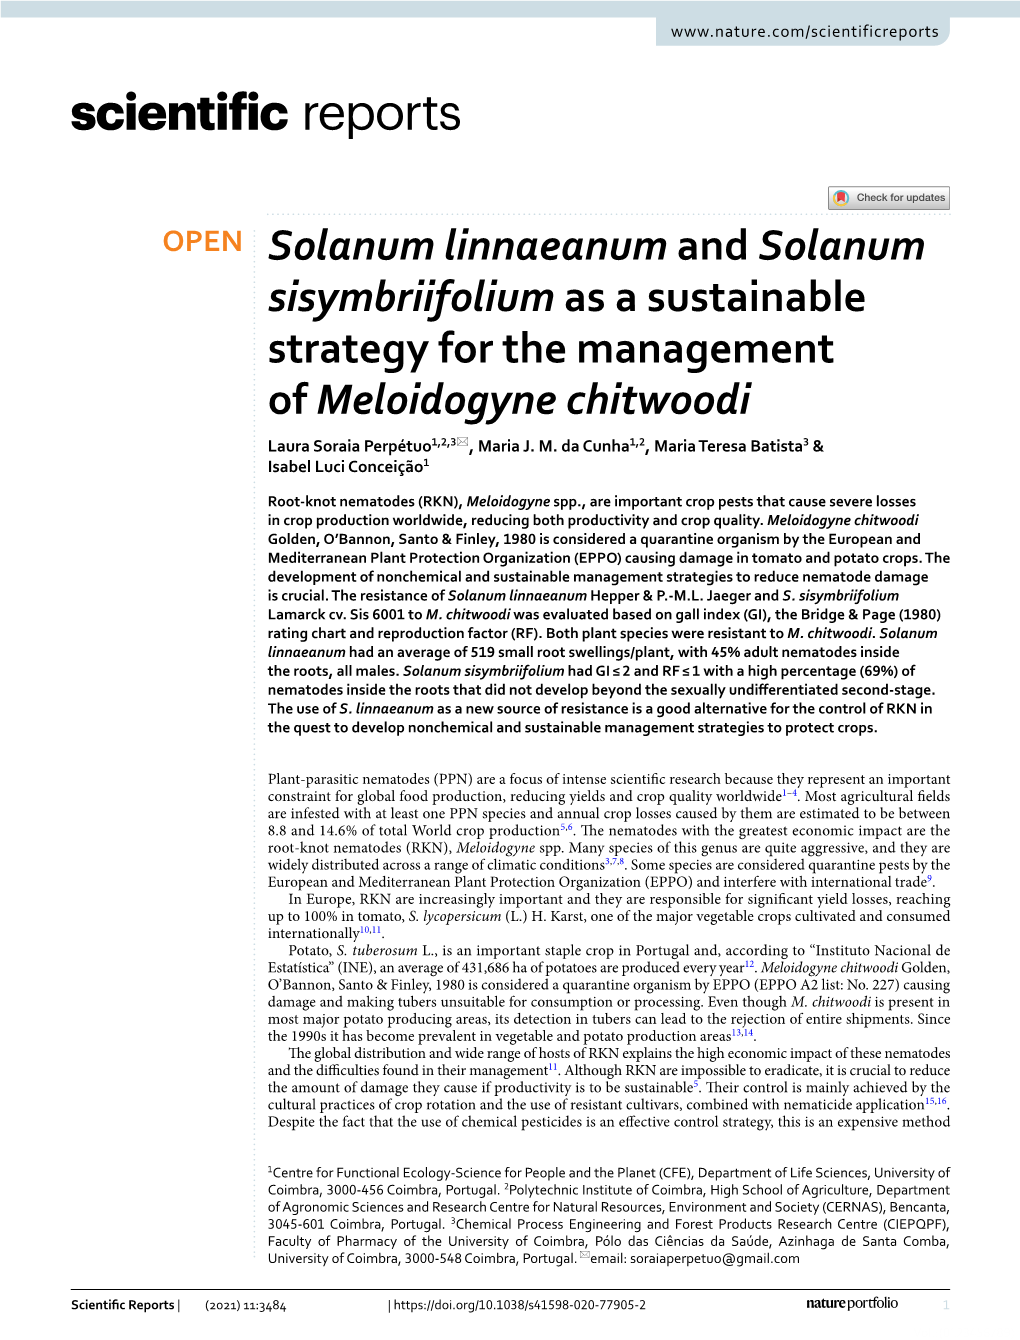 Solanum Linnaeanum and Solanum Sisymbriifolium As a Sustainable Strategy for the Management of Meloidogyne Chitwoodi Laura Soraia Perpétuo1,2,3*, Maria J